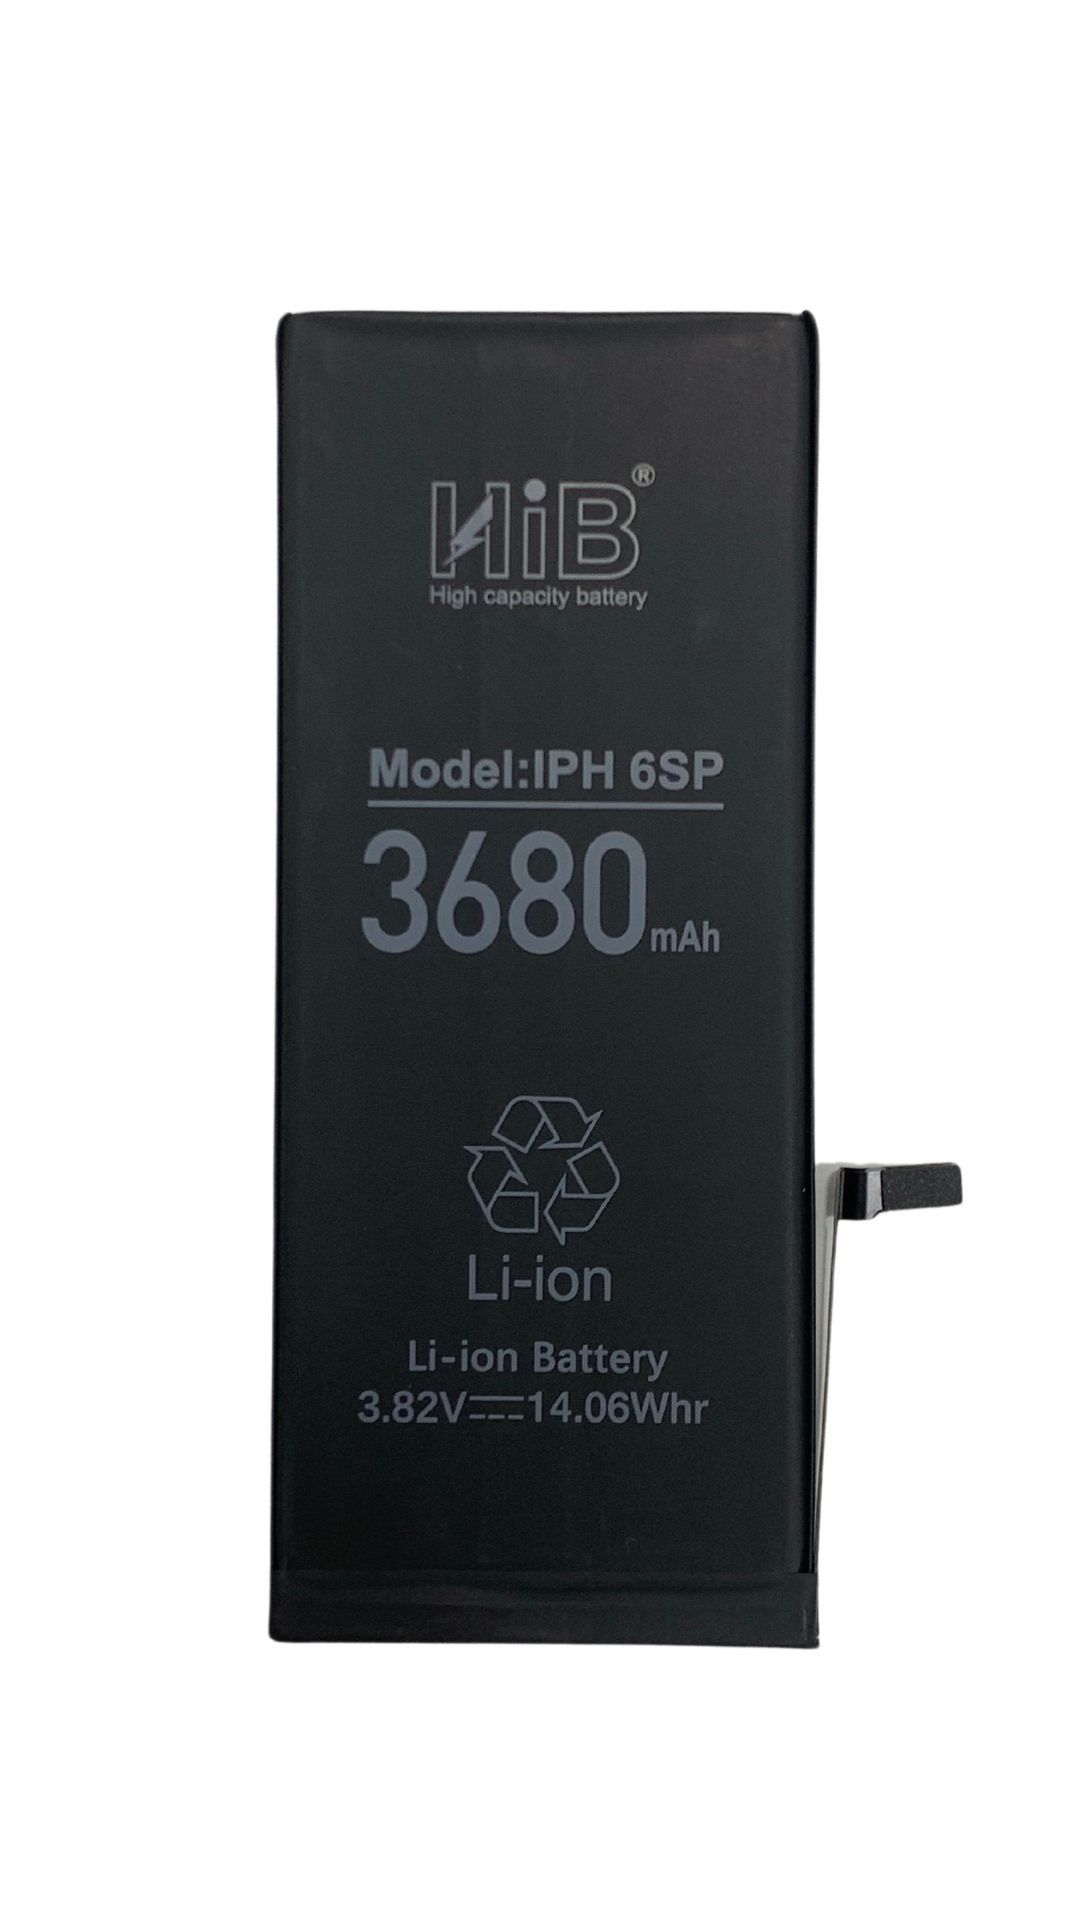 Bateria iPhone 6S Plus HIB - 3680mAh - Alta Capacidade - Só Games Cell Parts